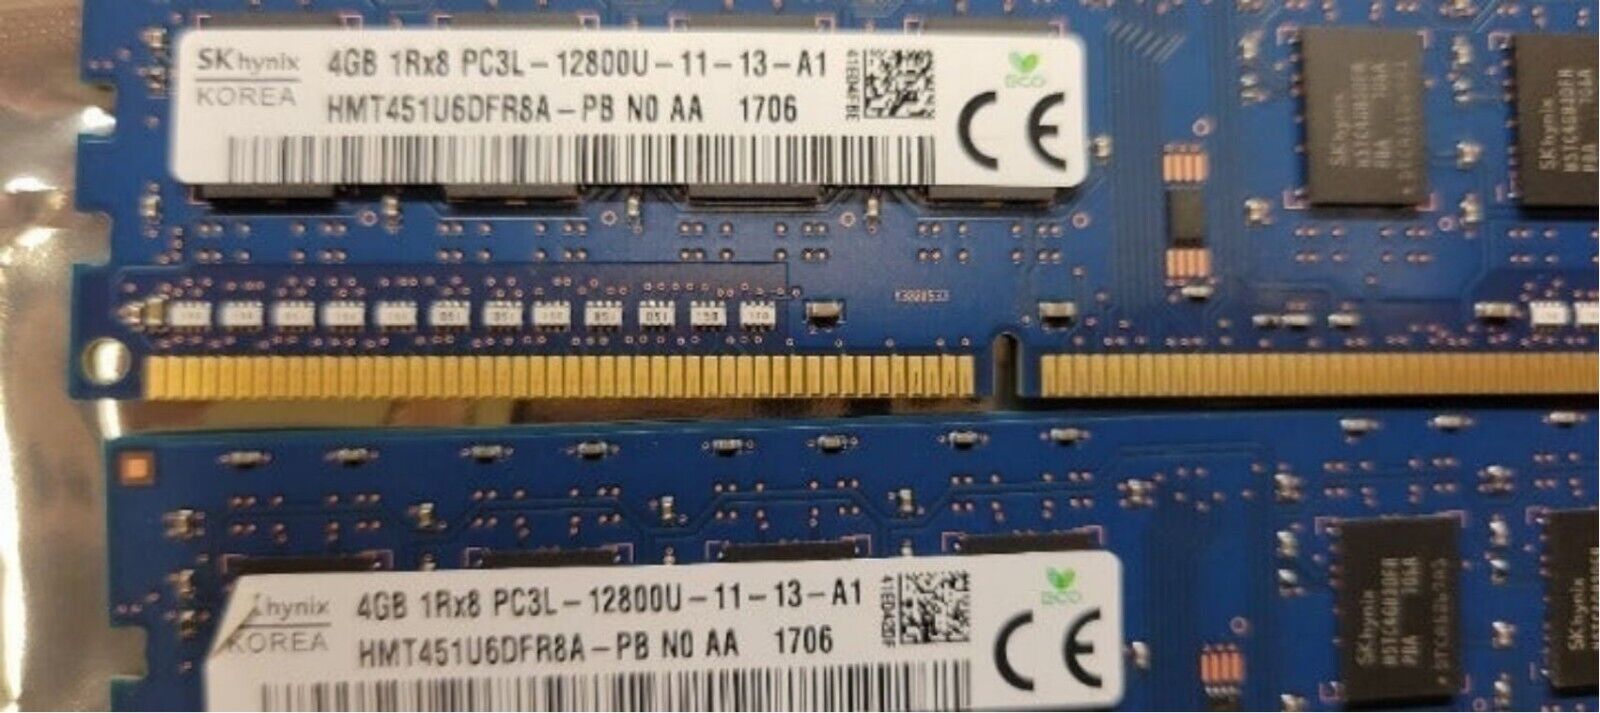 SK hynix 16GB kit (4GB x 4) memory PC3L-12800U desktop RAM Low Voltage ram 1.35v